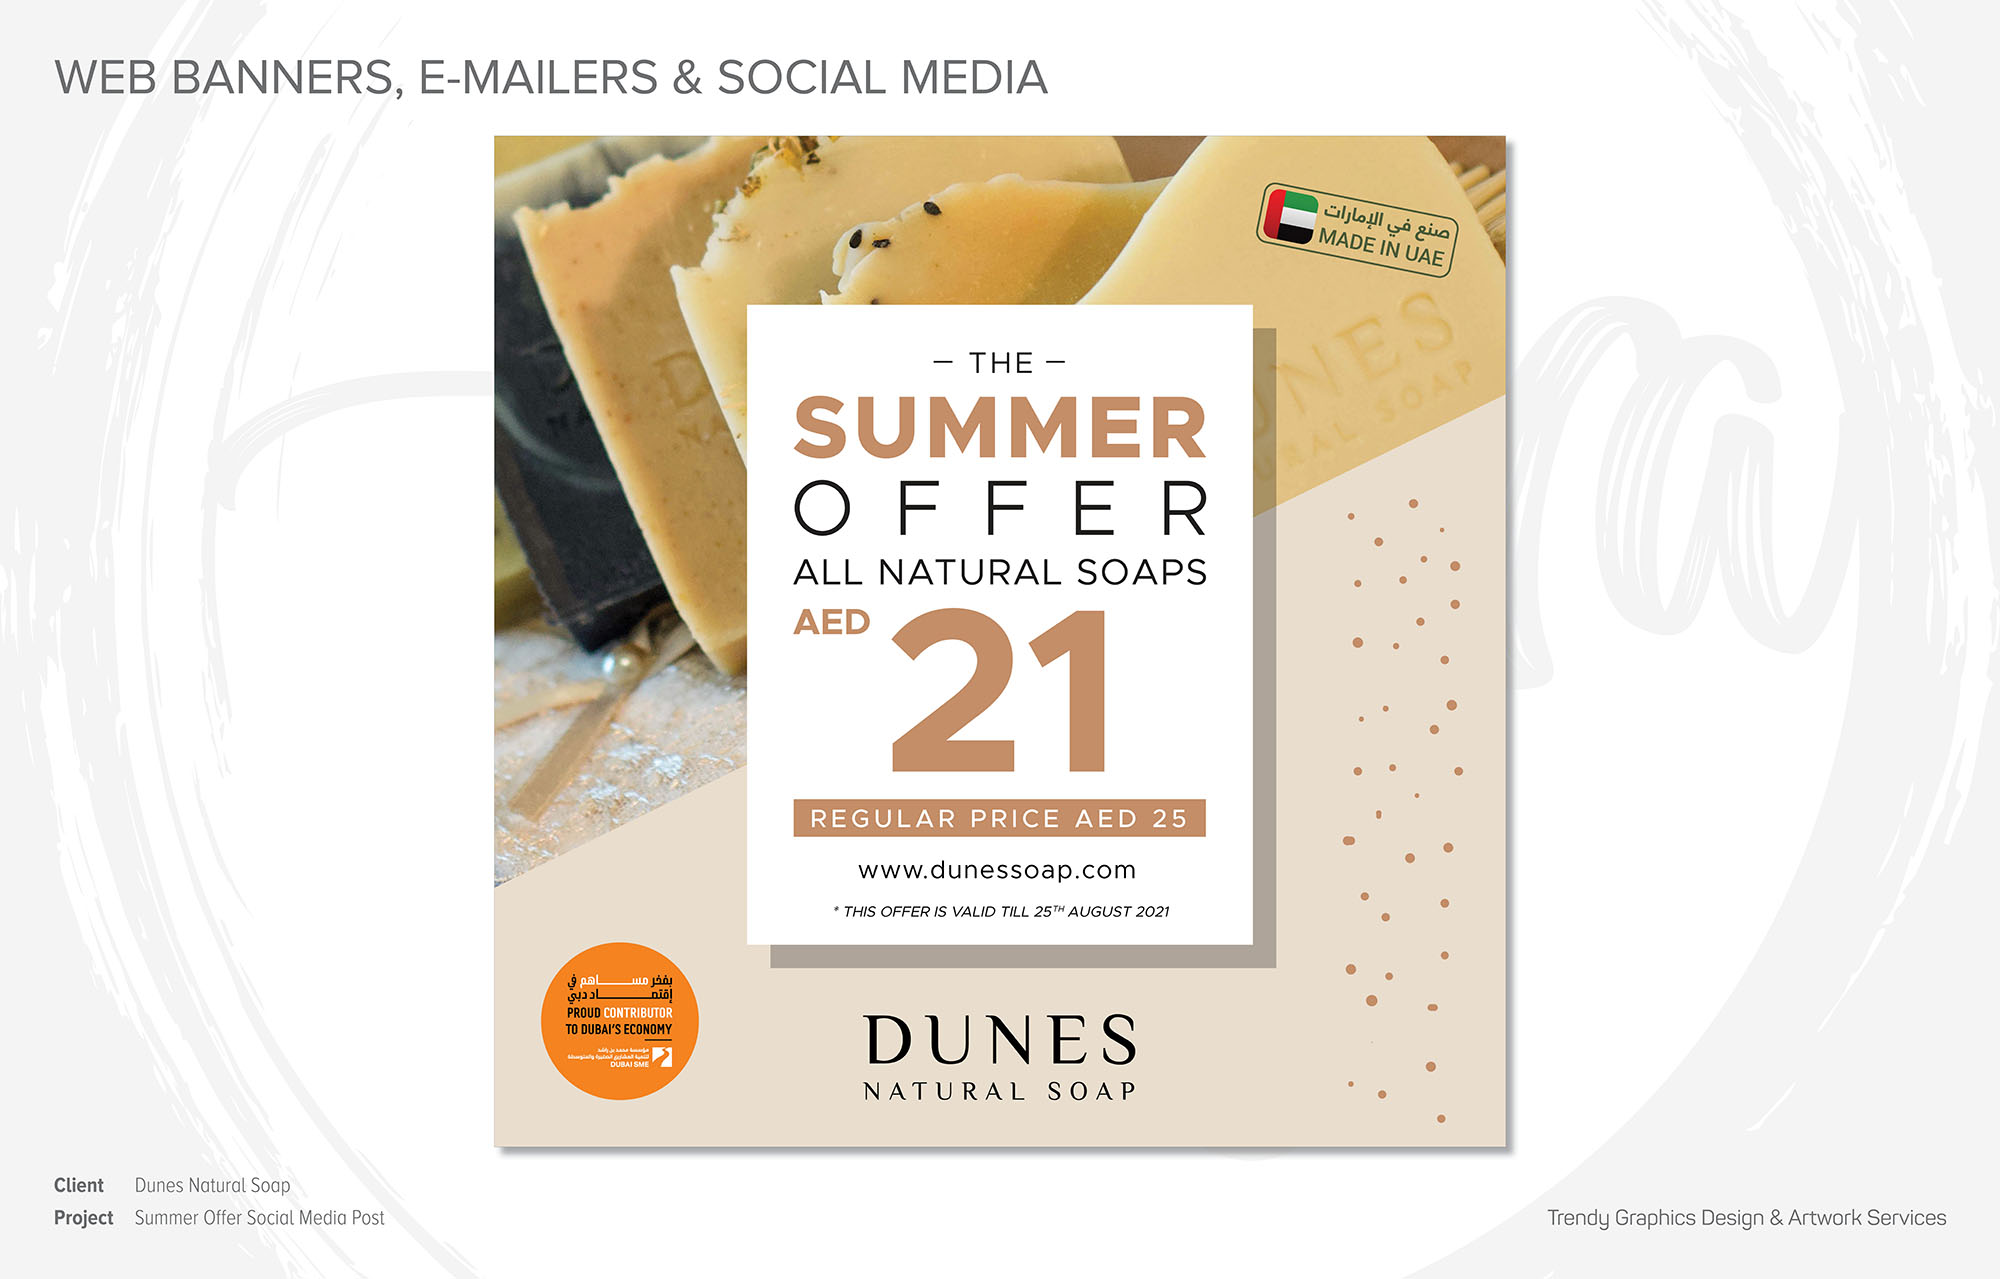 Dunes Natural Soap – Summer Offer Social Media Post